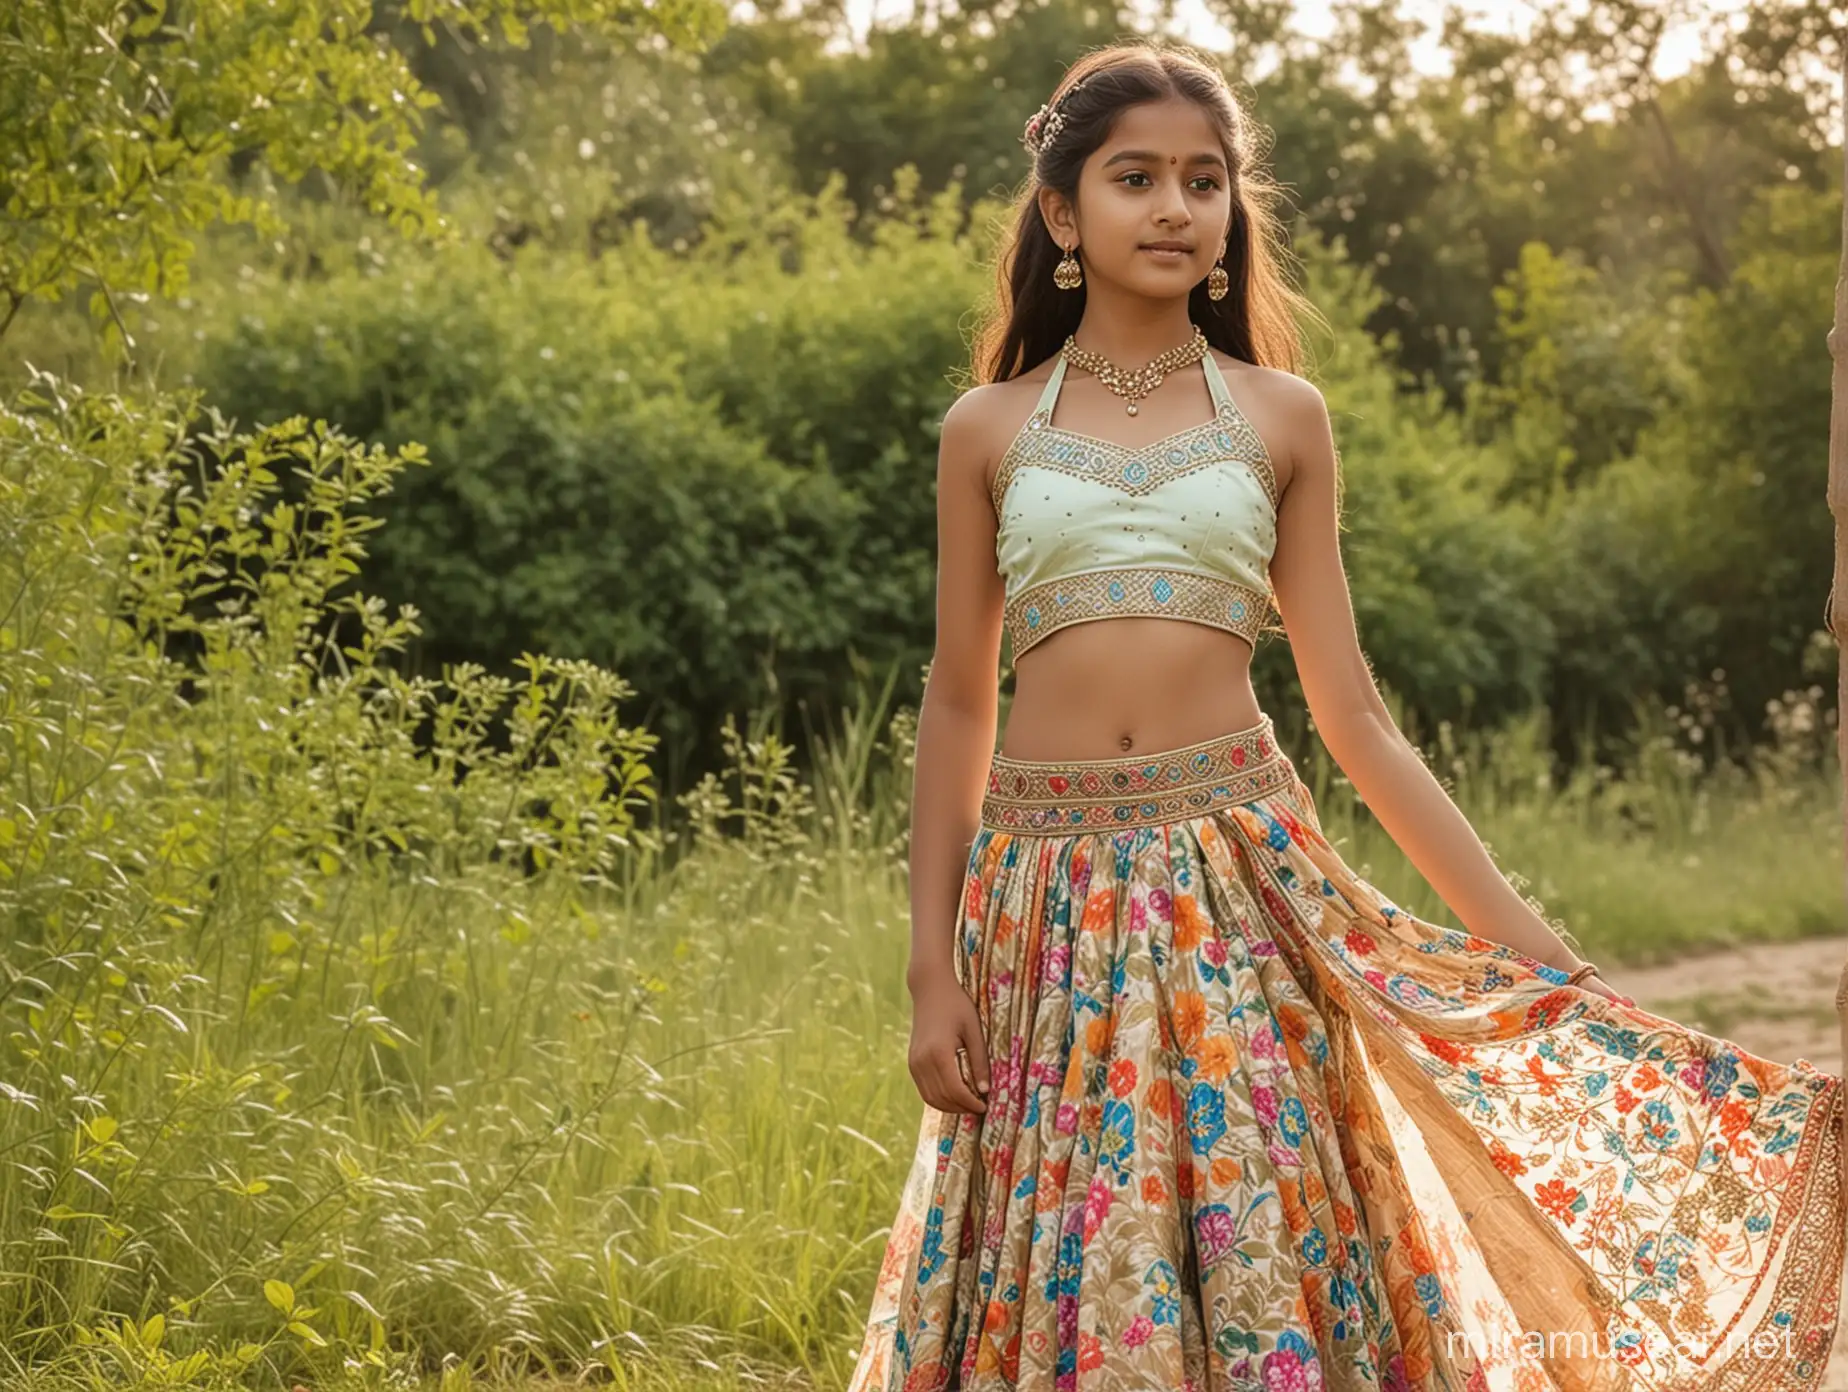 Young Indian Girl in Traditional Lehenga Enjoying Nature